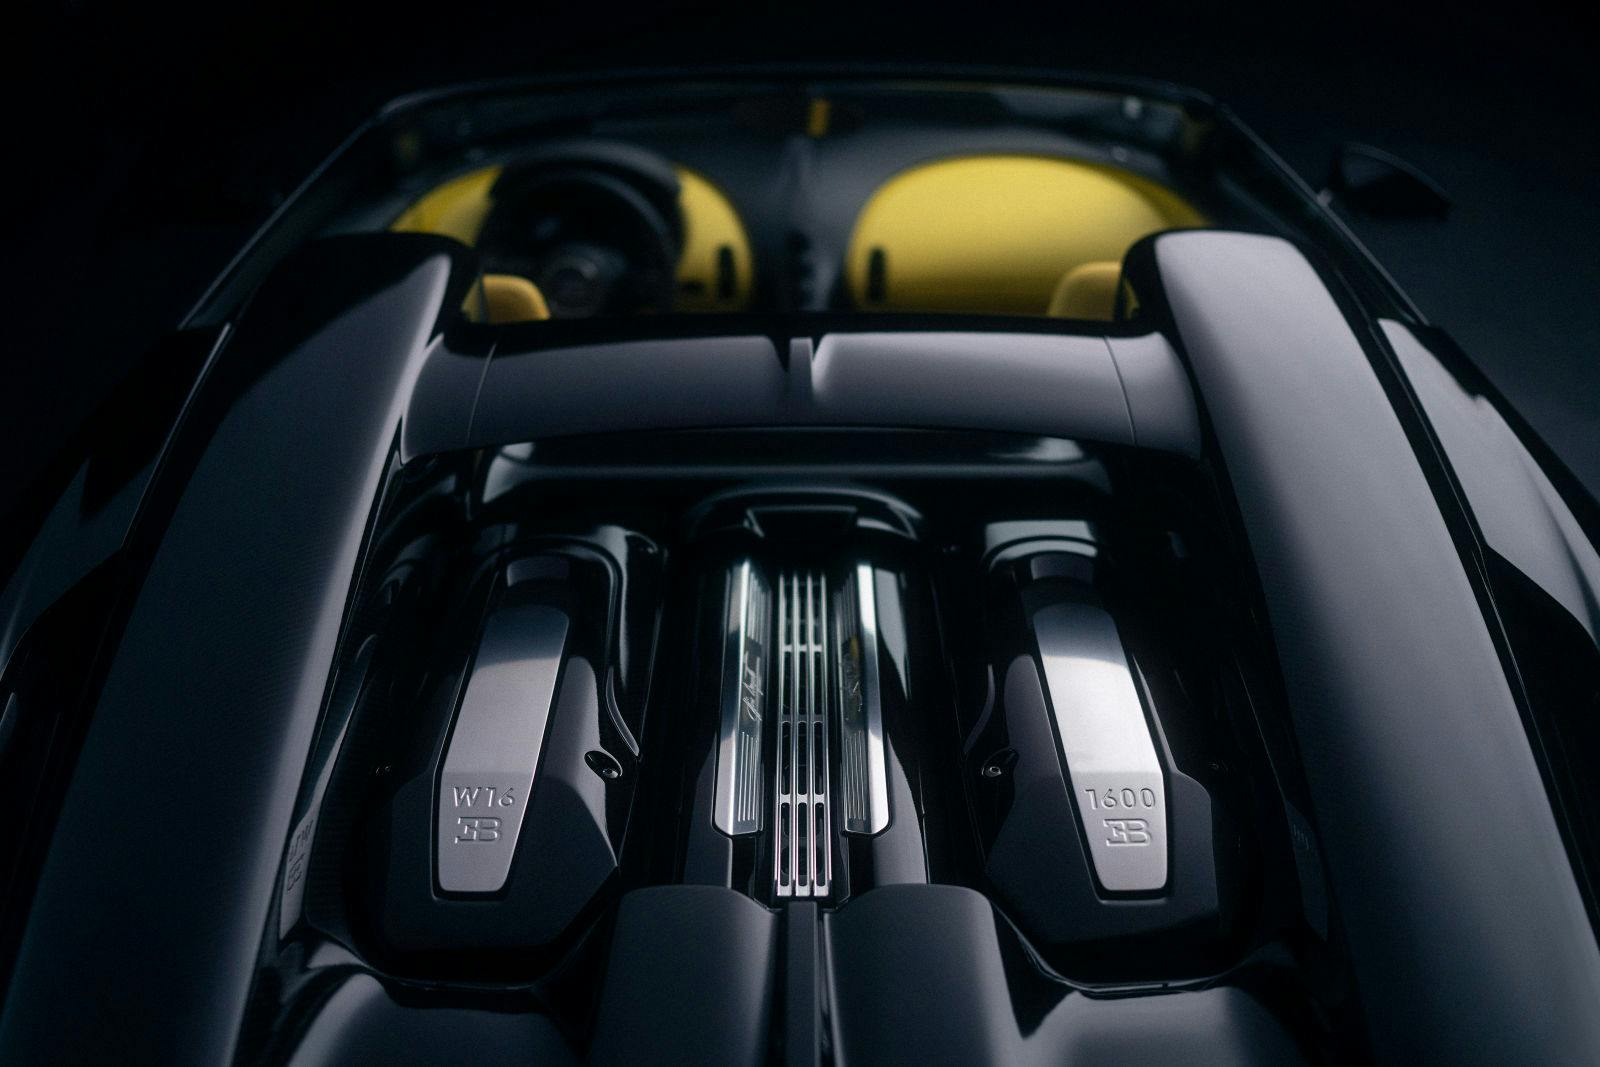 The Bugatti W16 Mistral's engine producing 1600 PS.